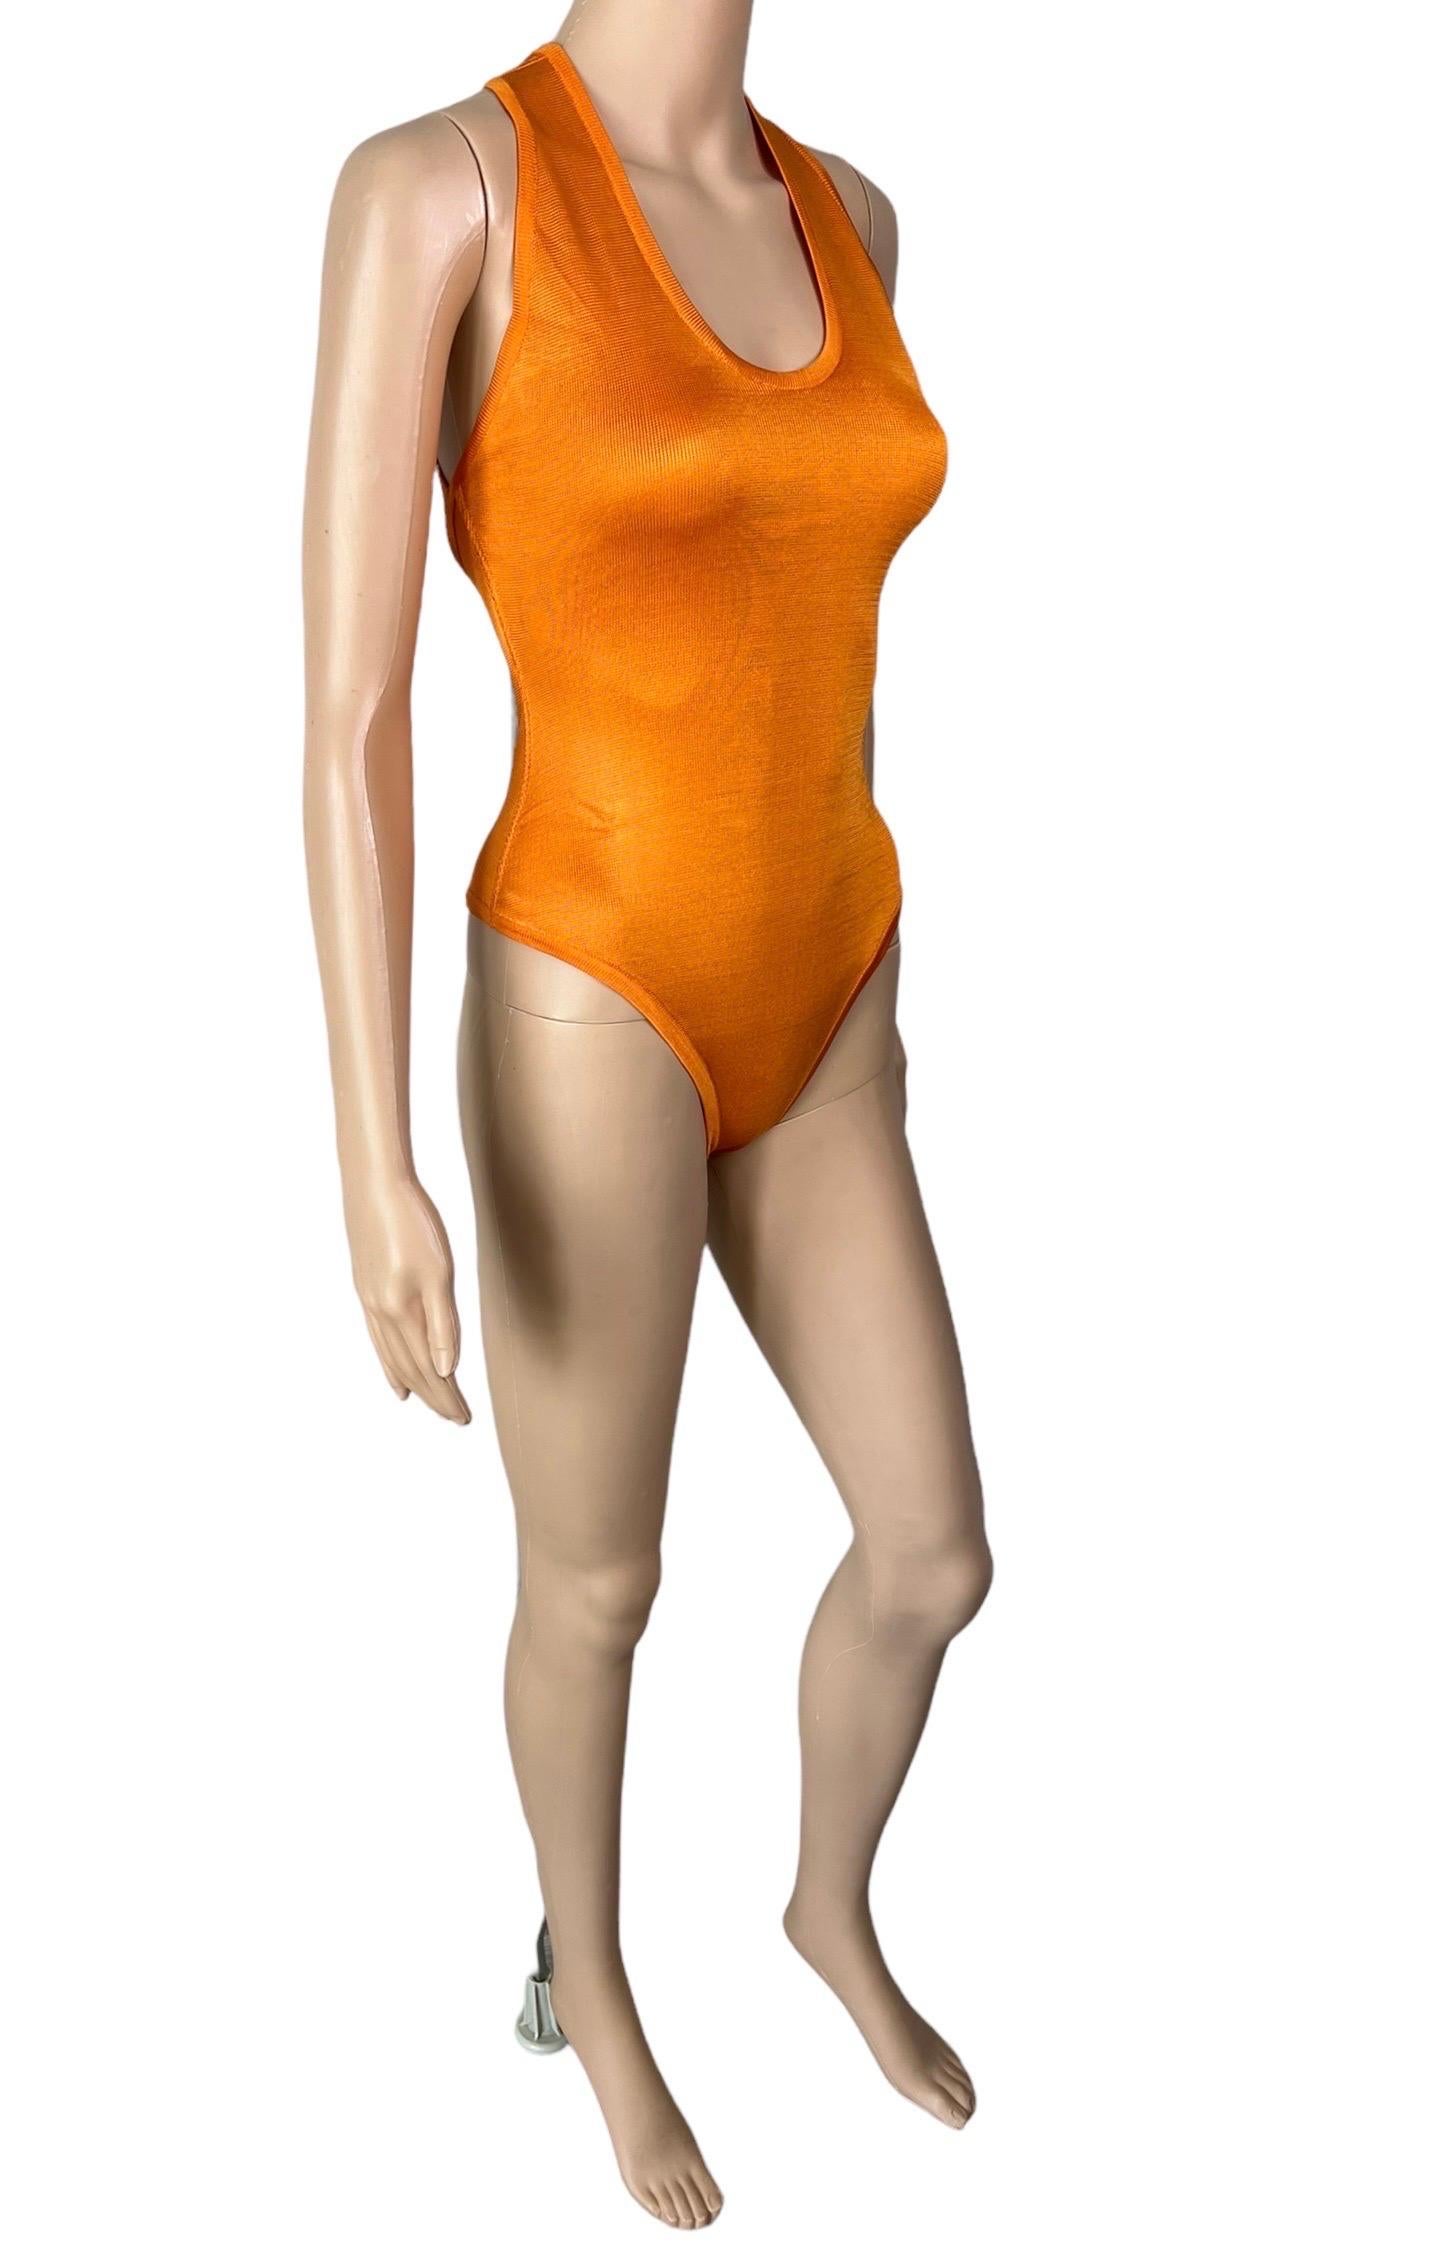 Azzedine Alaia Vintage S/S 1986 Open Back Orange Bodysuit Top For Sale 2